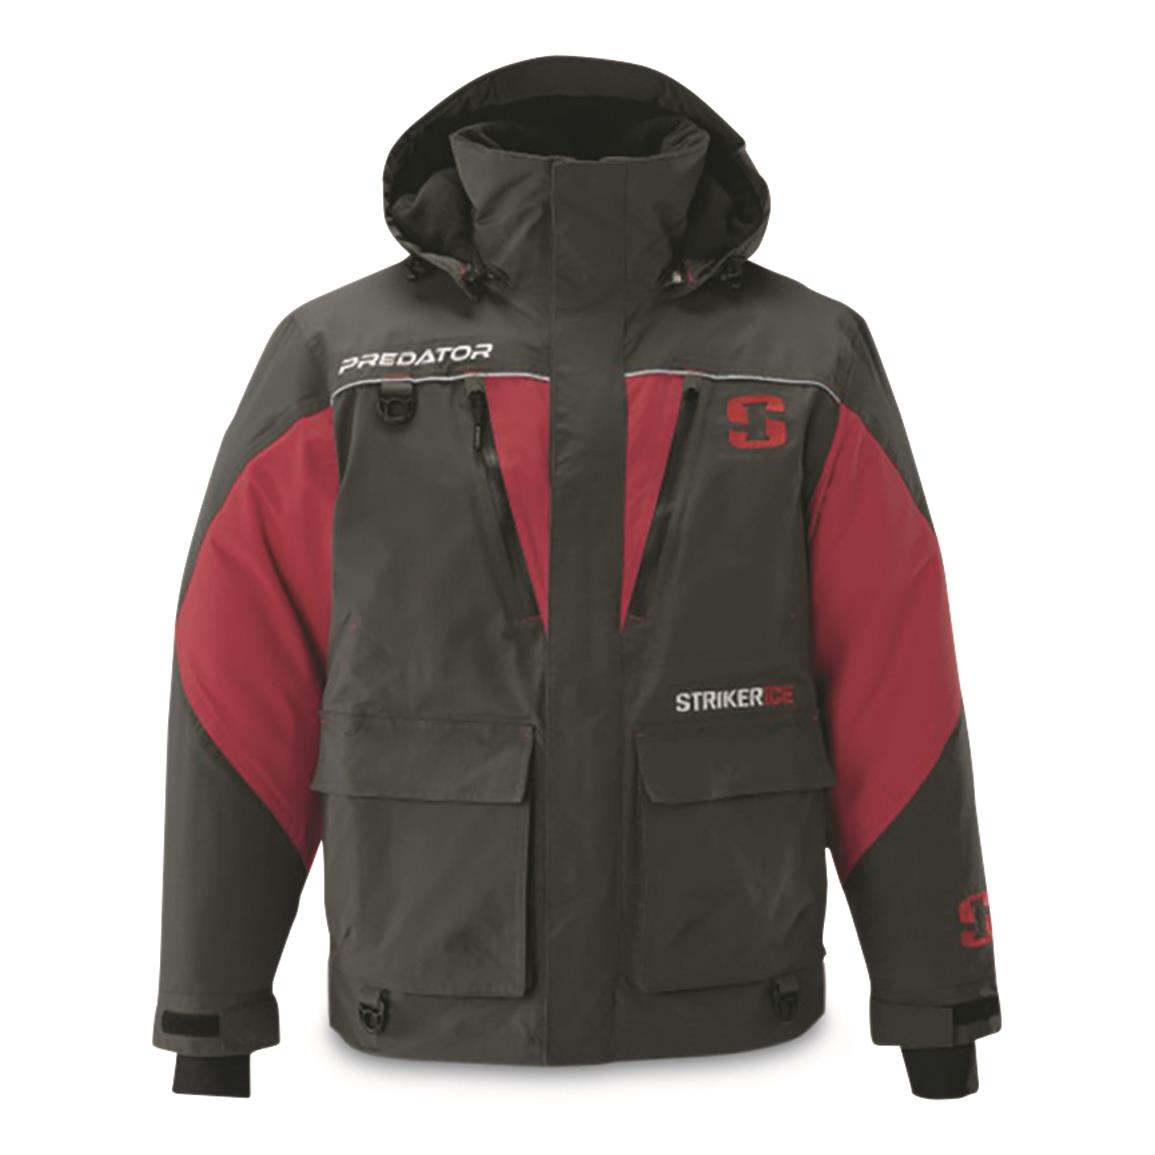 StrikerICE Men's Predator Ice Fishing Jacket, Charcoal/red